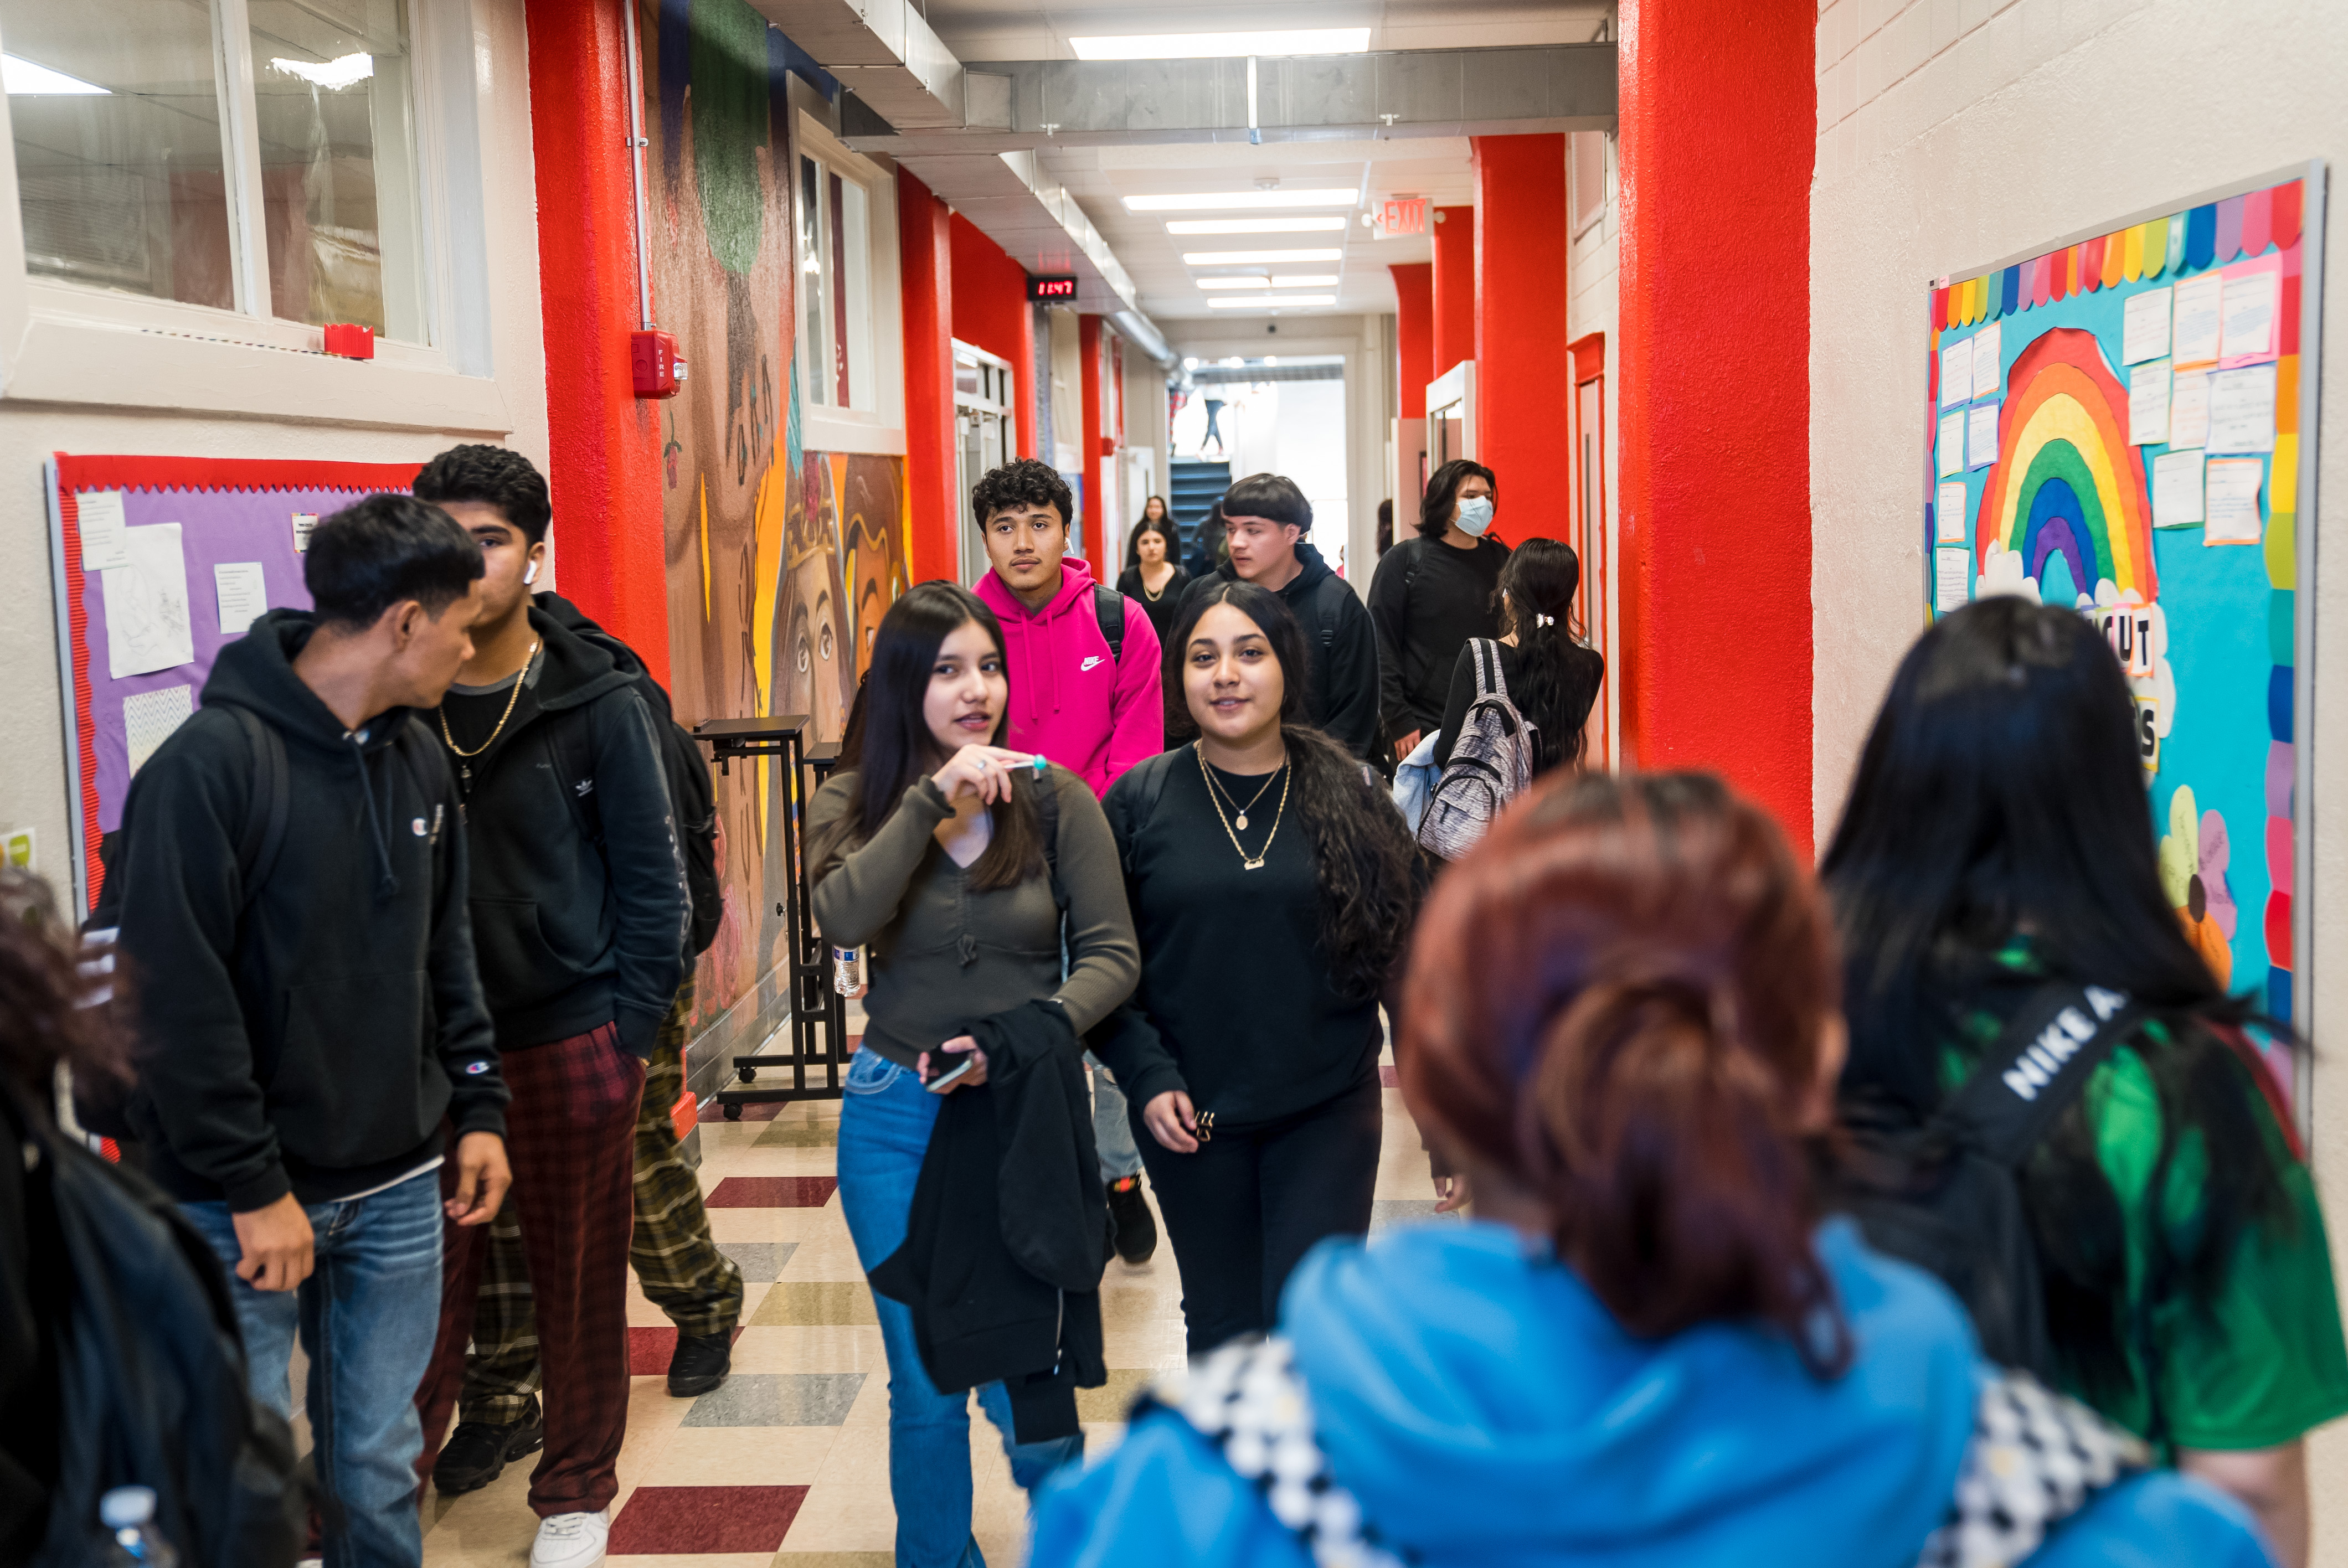 High School students in hallway